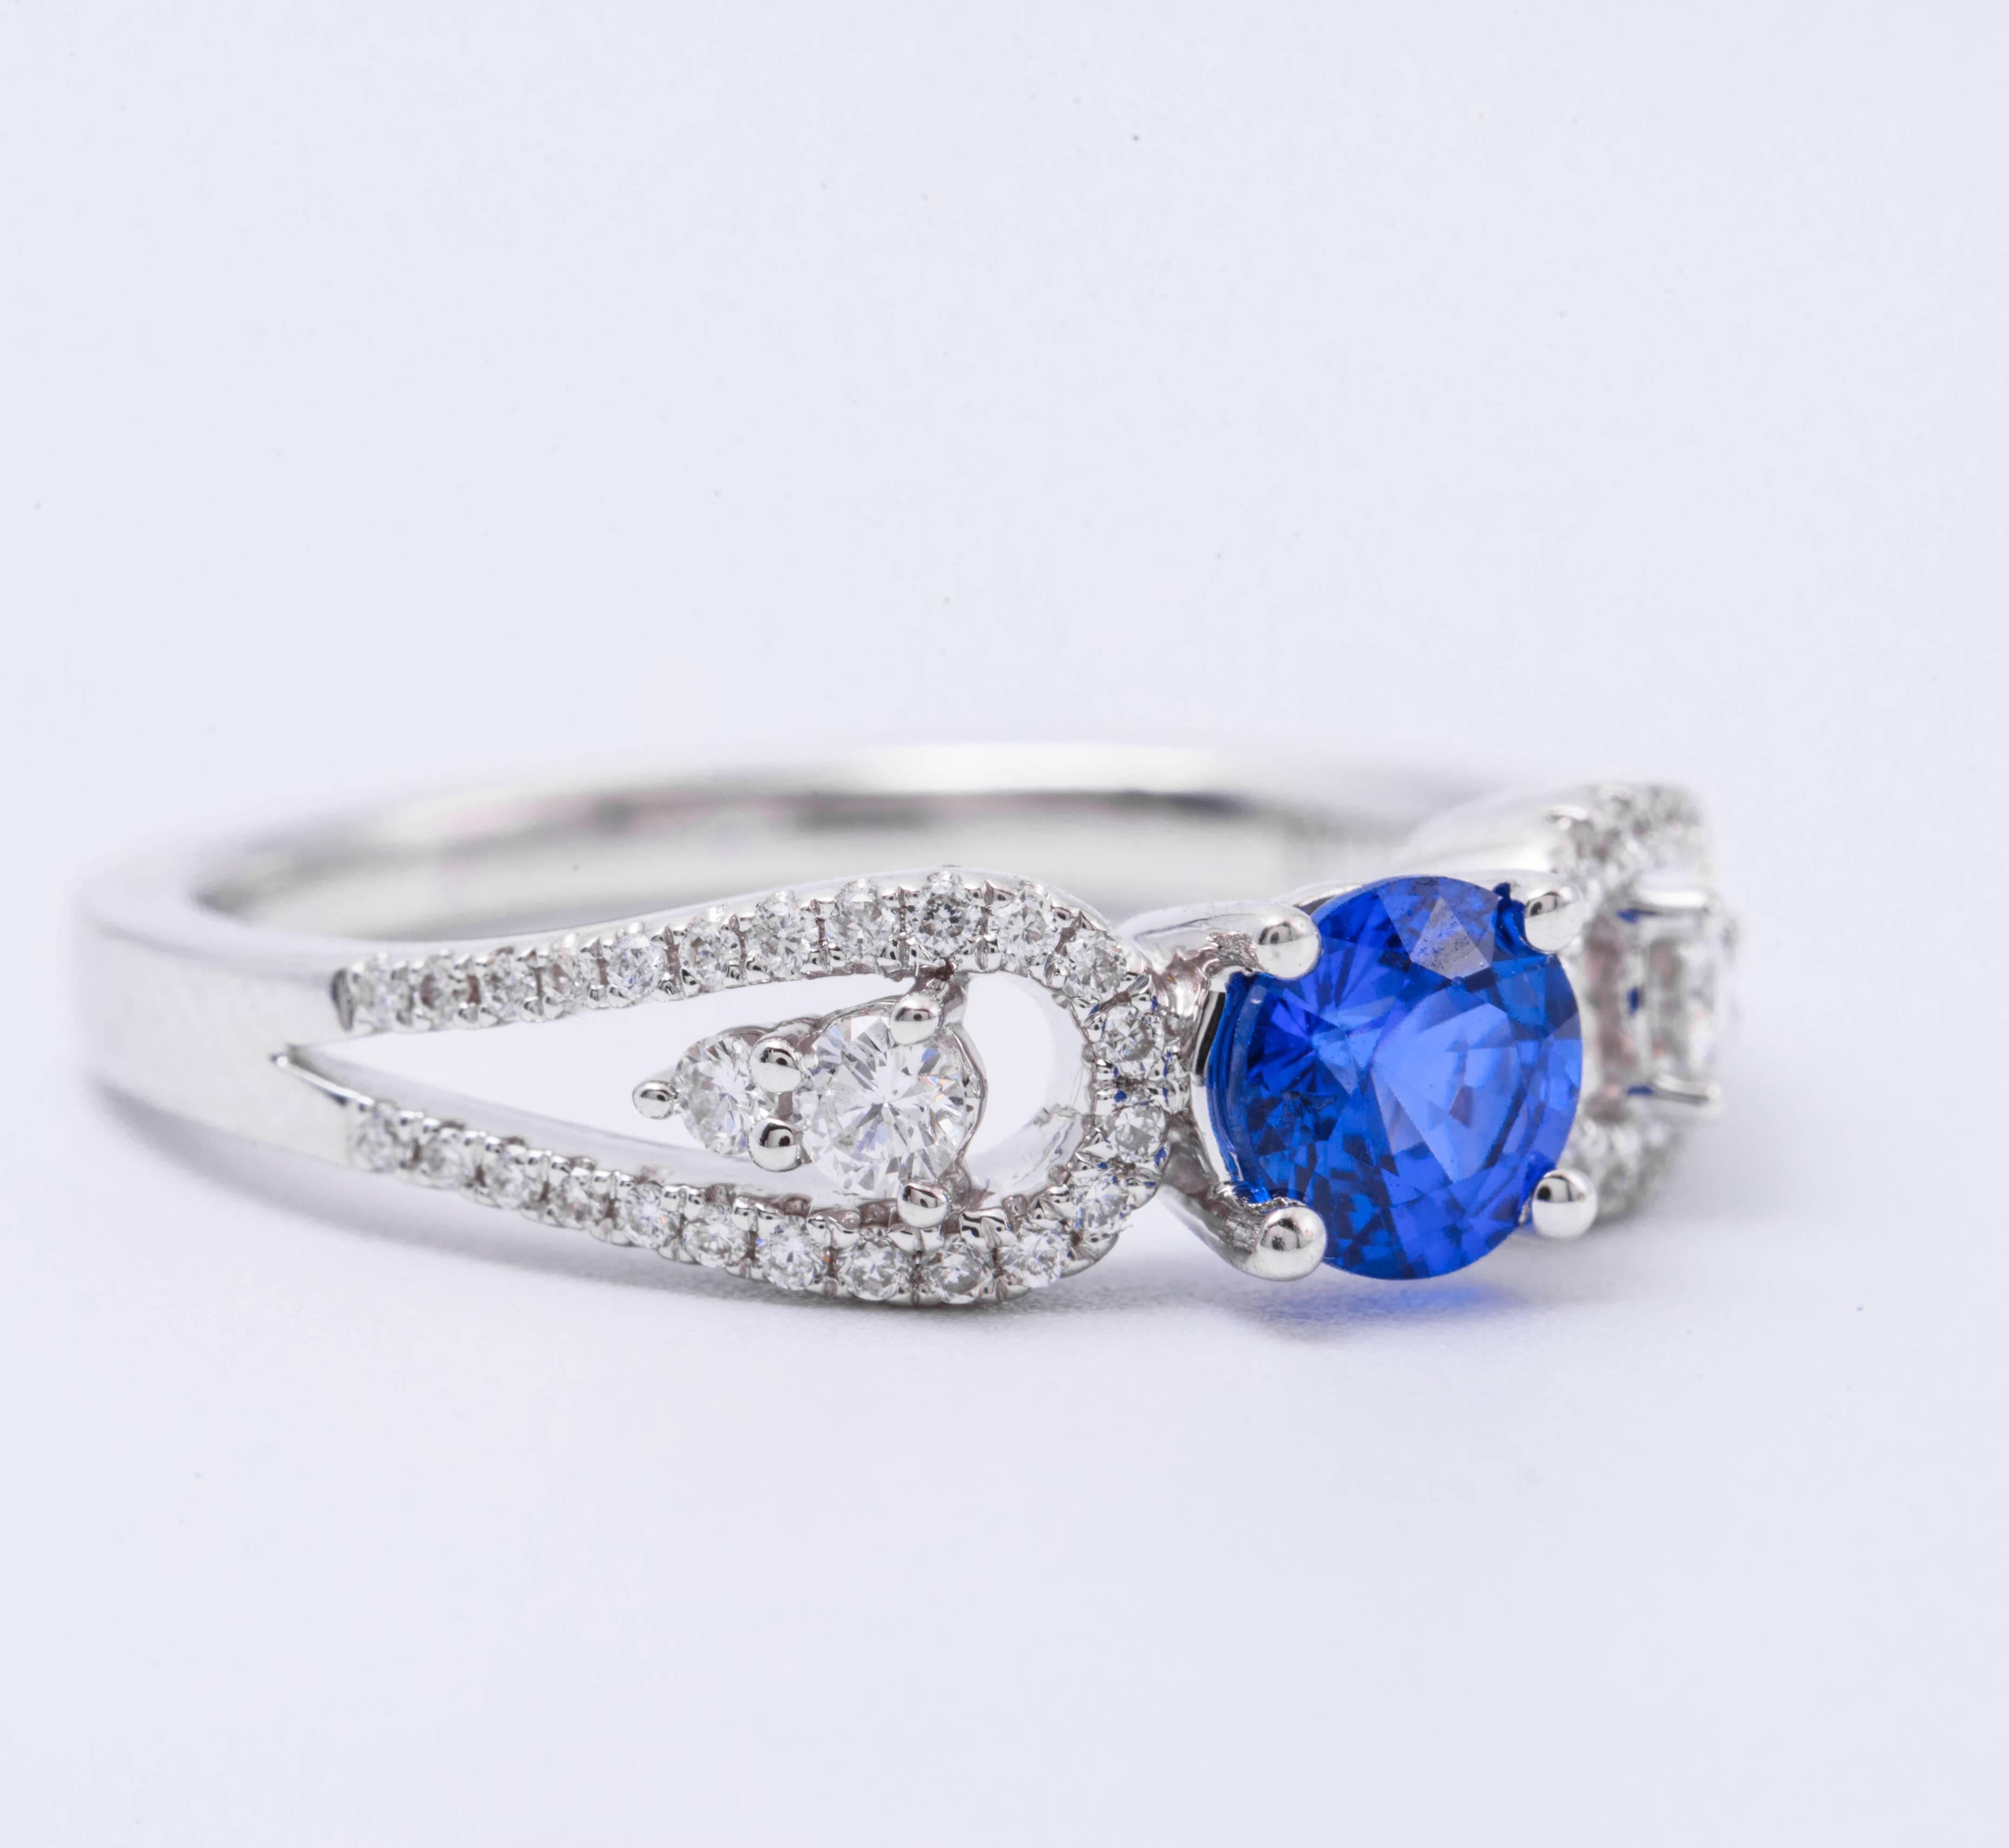 64 carat diamond ring